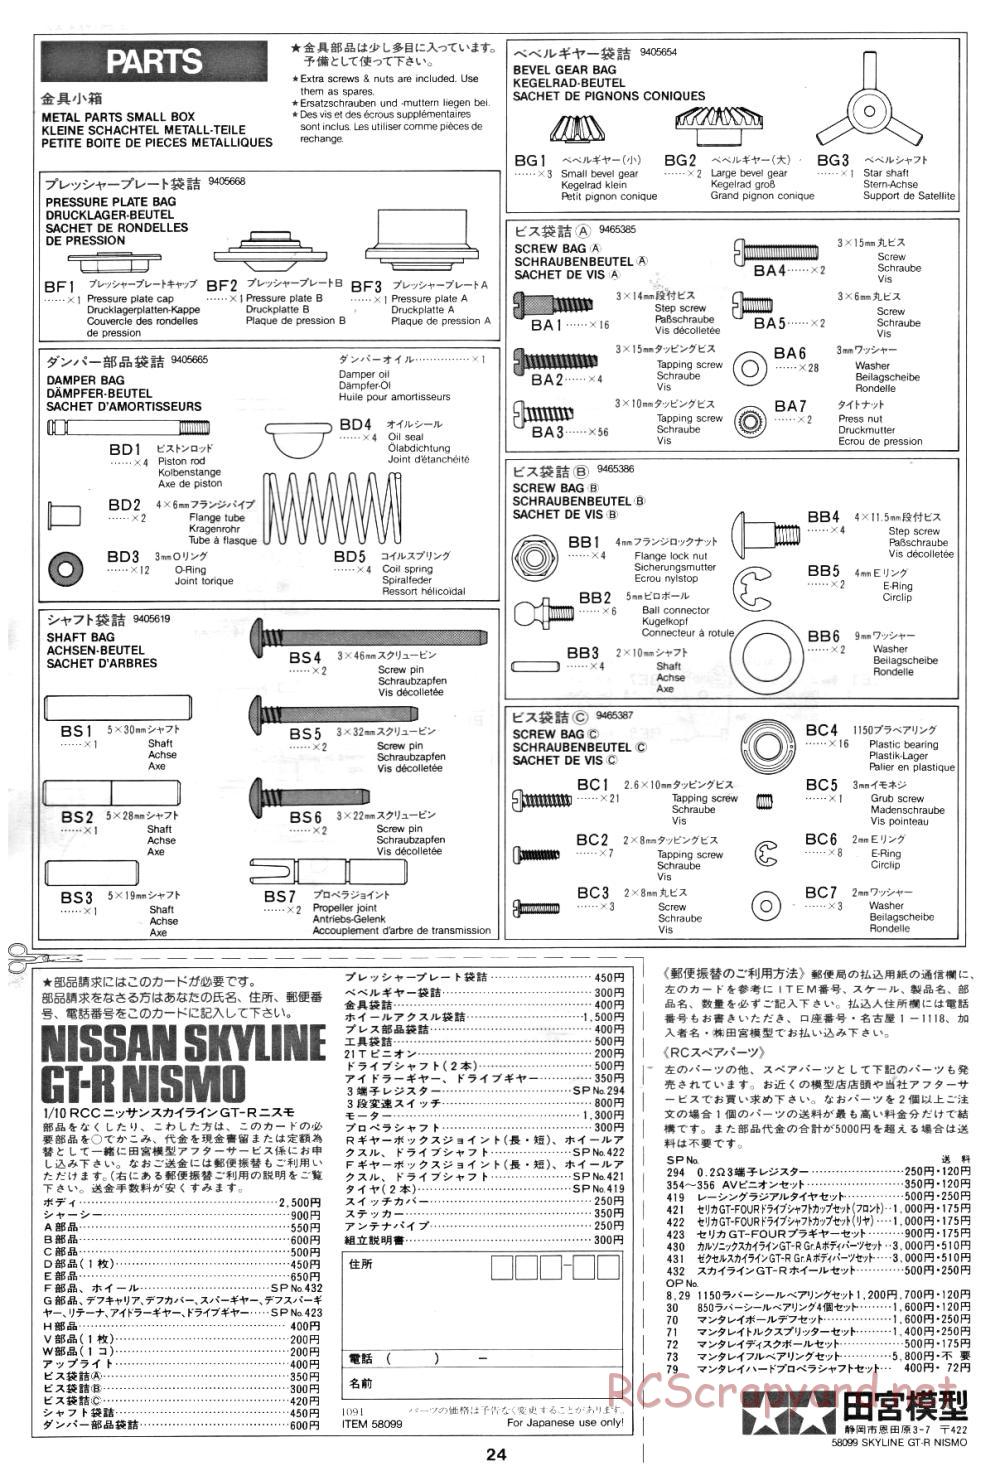 Tamiya - Nissan Skyline GT-R Nismo - 58099 - Manual - Page 24